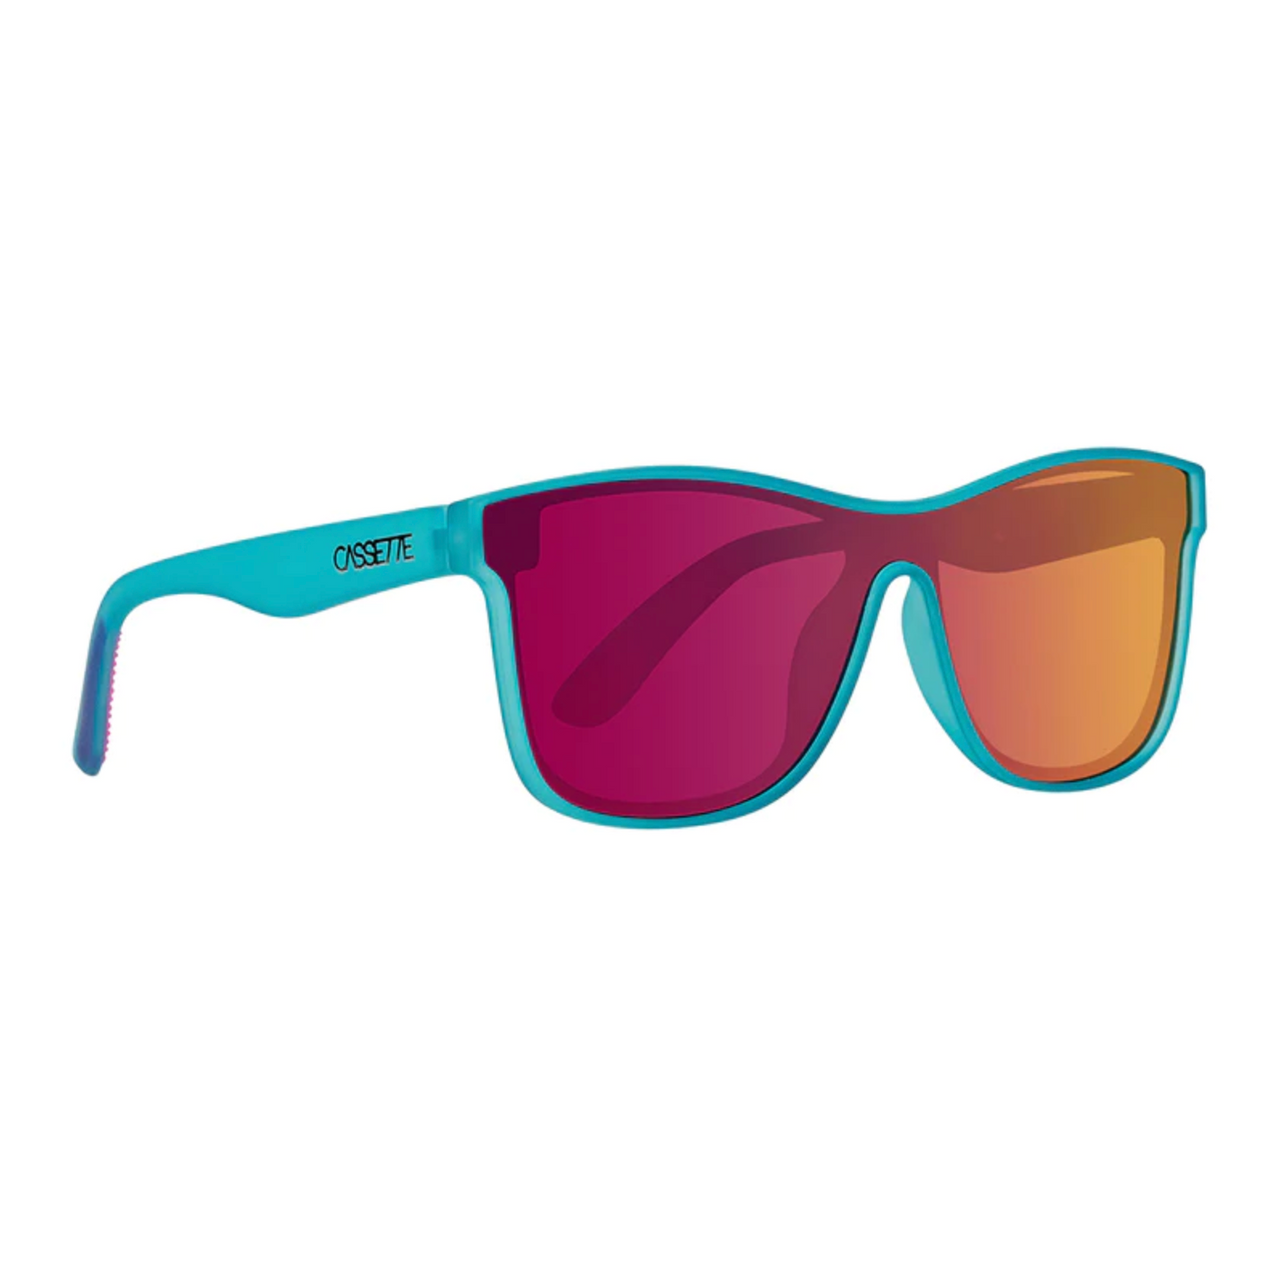 Cassette Optics Mercury Polarized Sunglasses - Assorted Colors